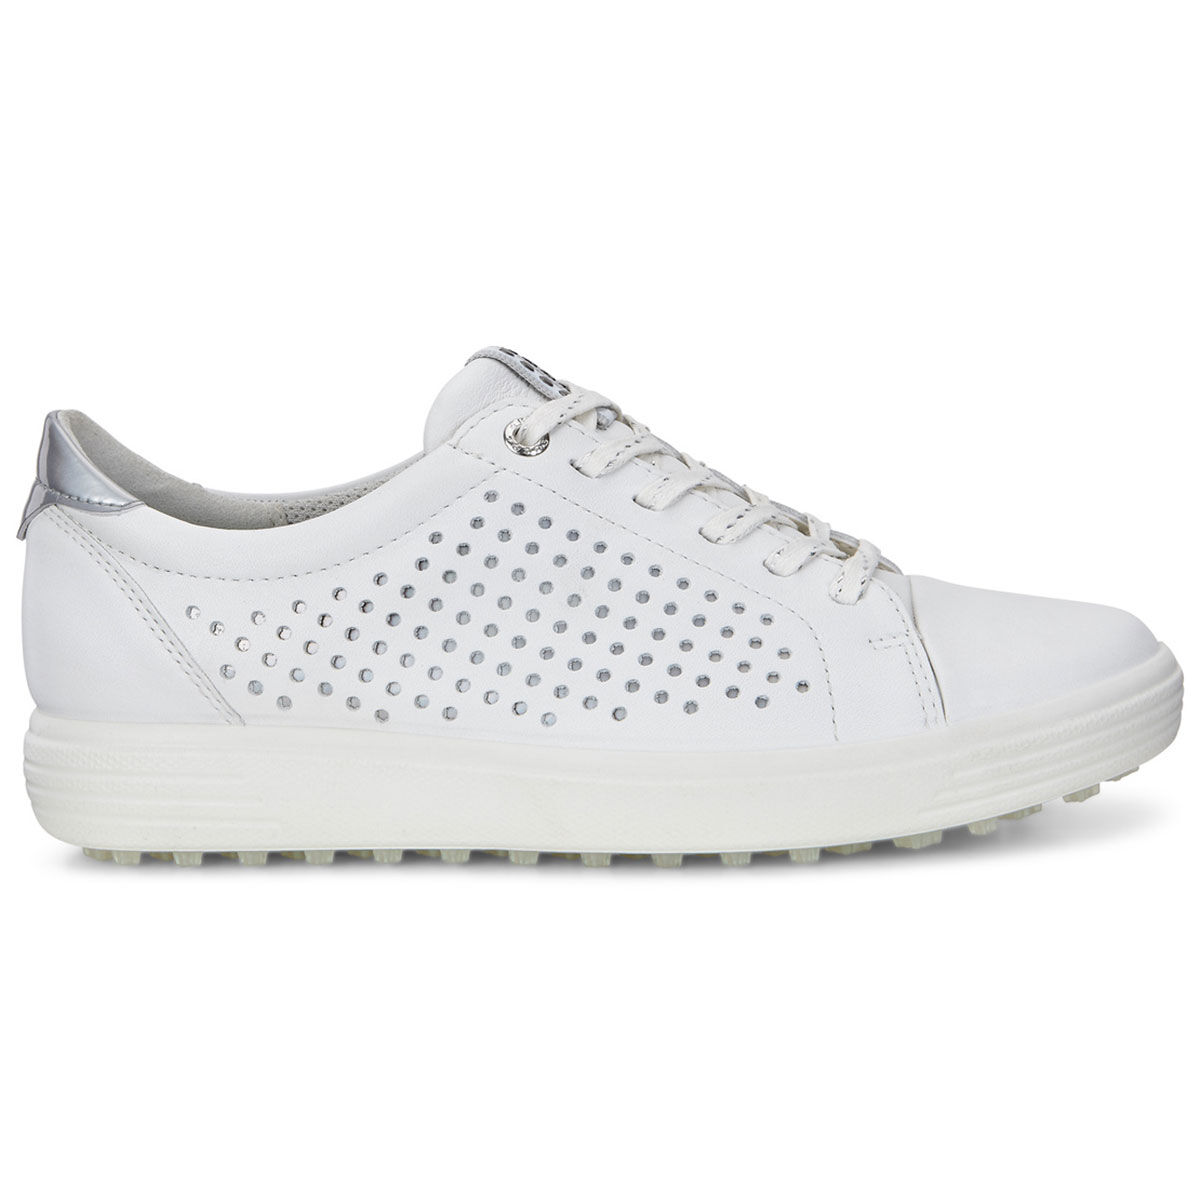 Chaussures ECCO Golf Casual Hybrid pour femmes, femme, 2, Blanc, Normal | Online Golf